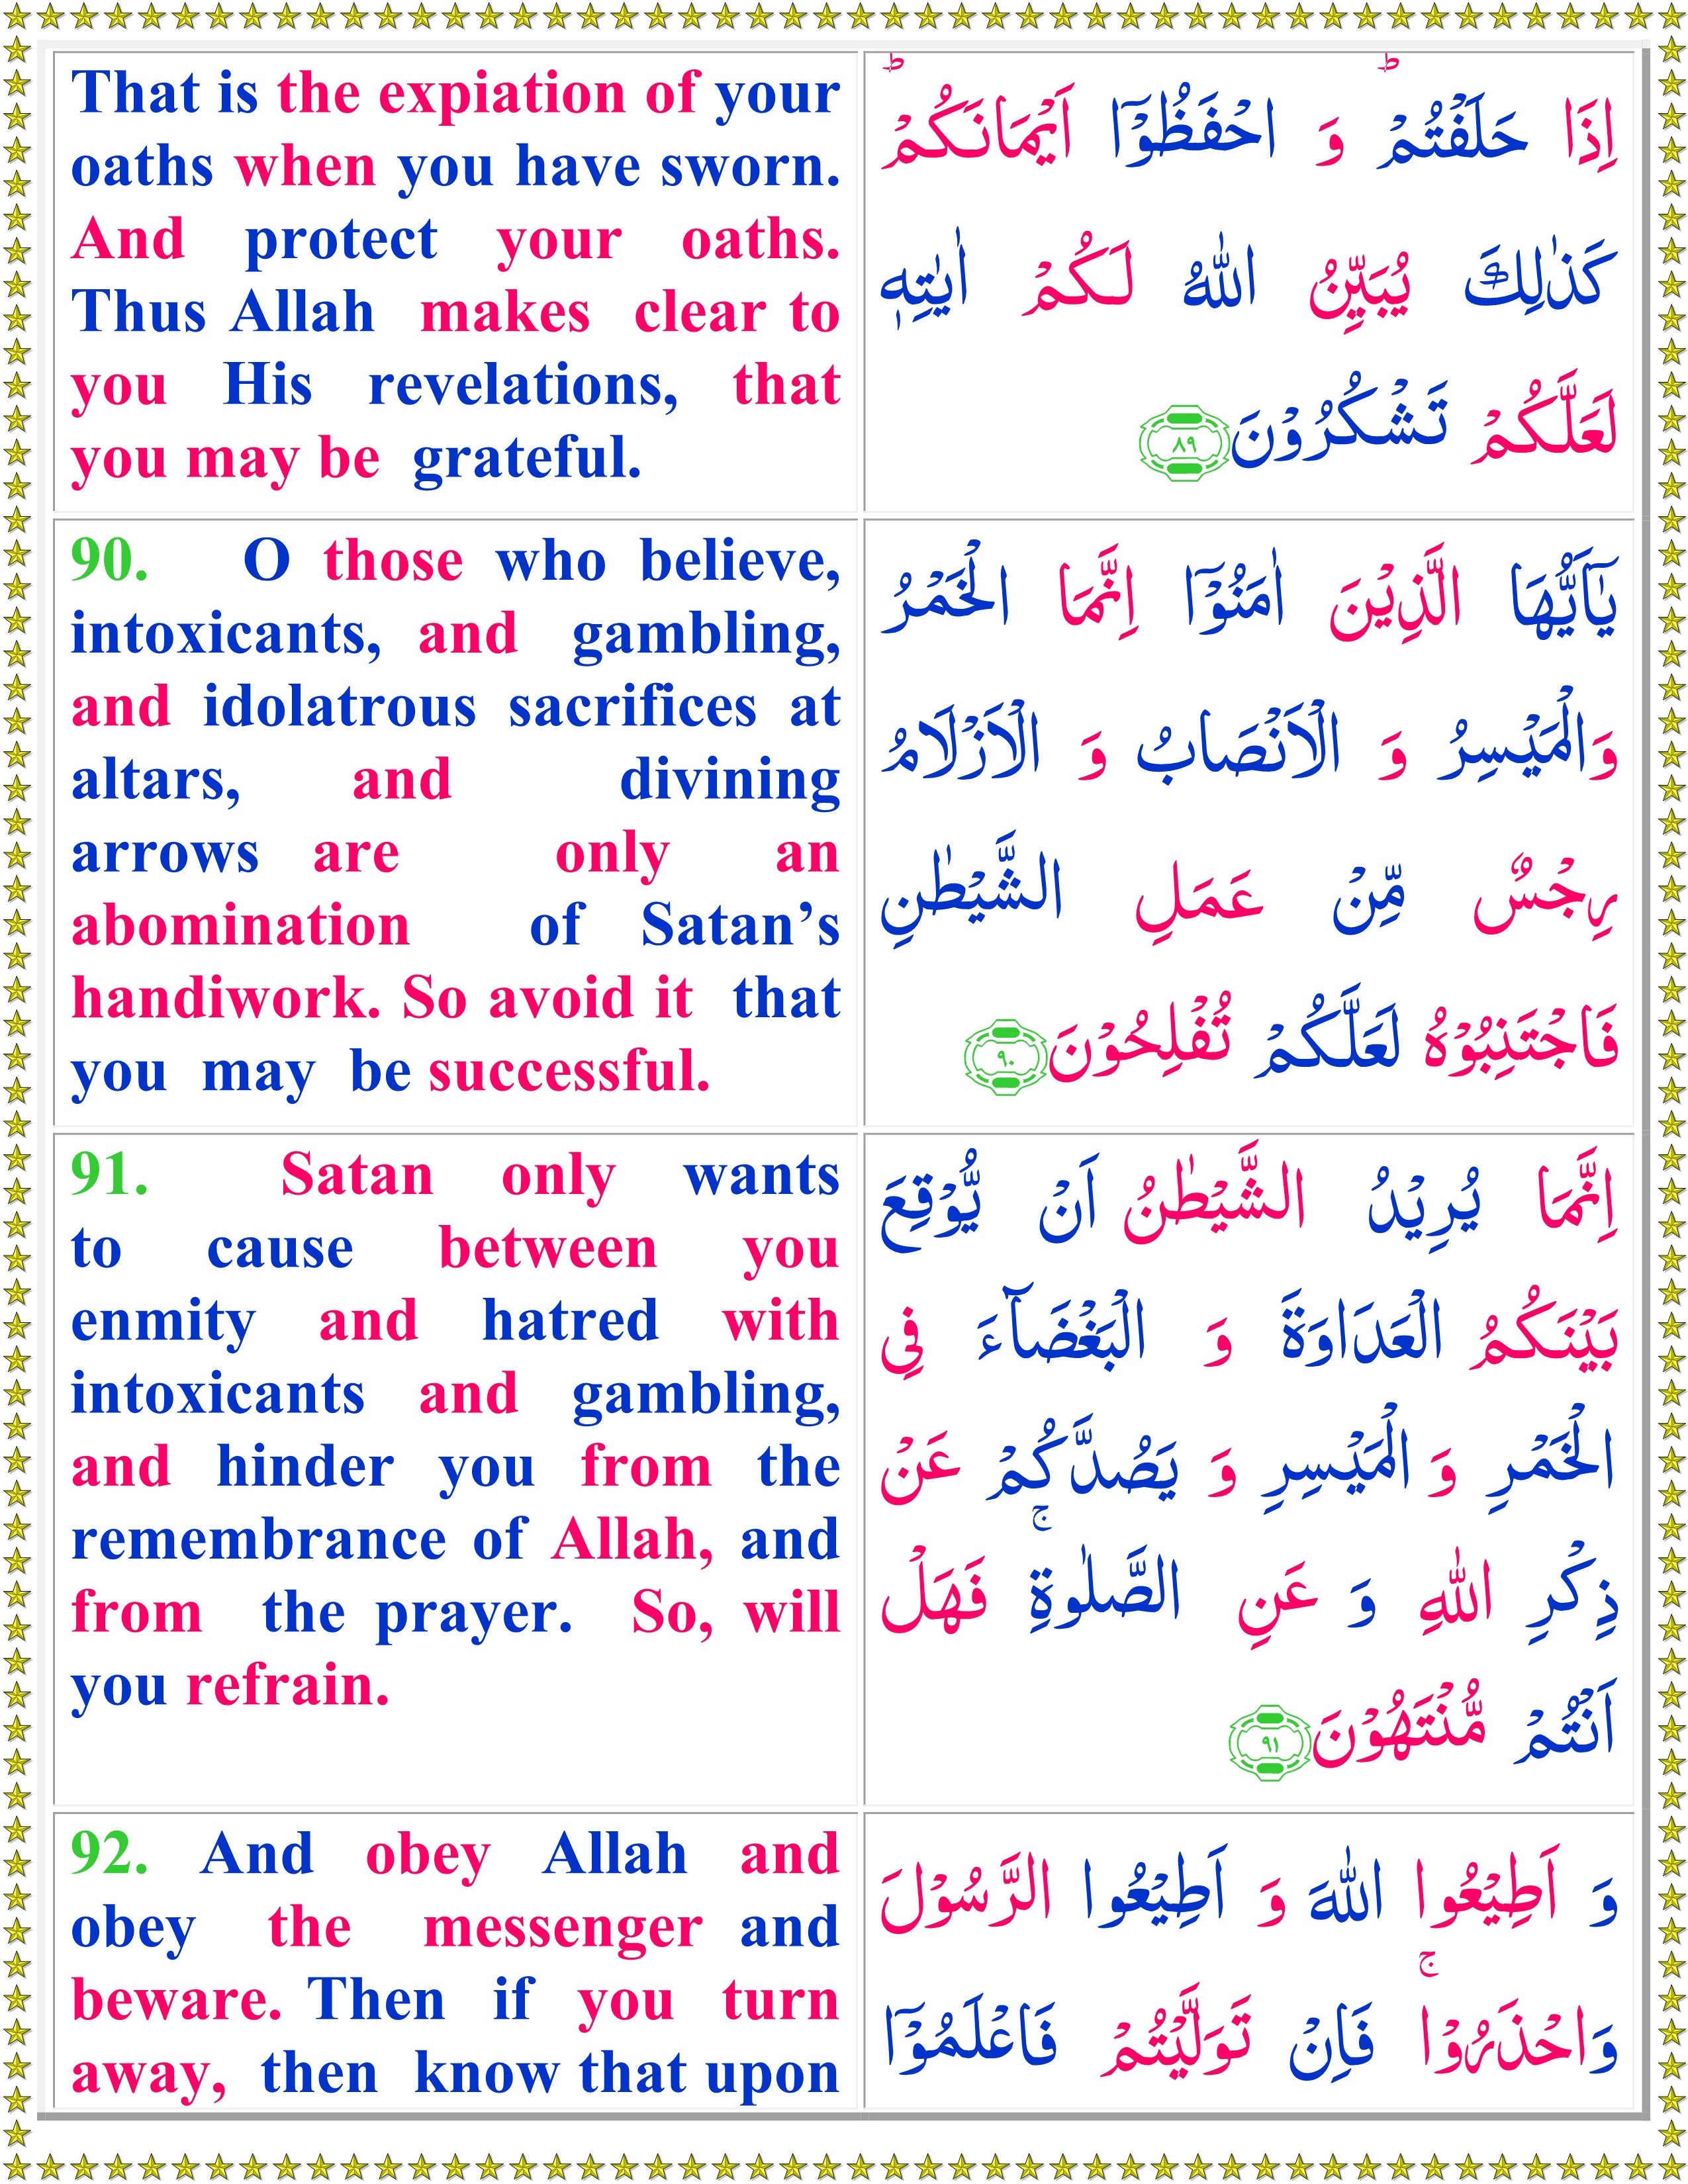 Read Surah Al Maidah With English Translation Page 4 Of 5 Quran O